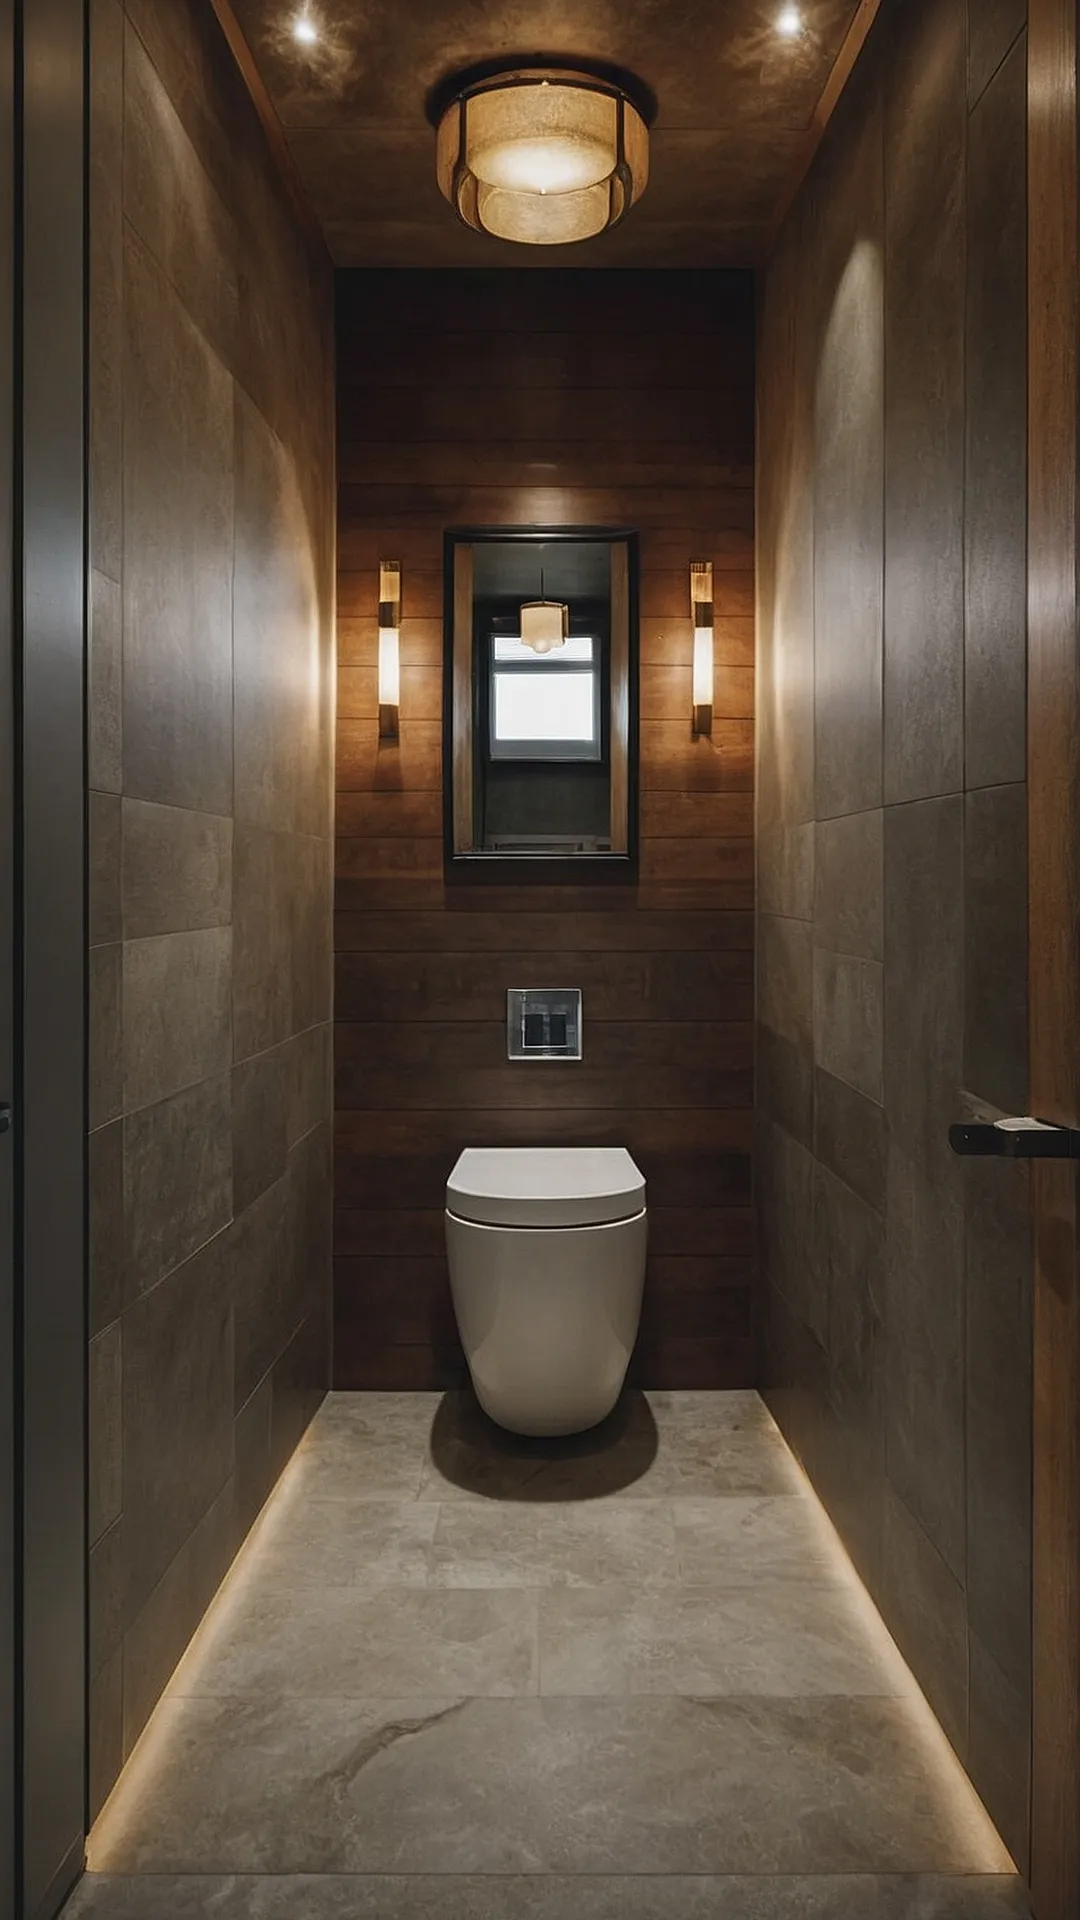 Luxurious Bathscapes: Inspiring Bathroom Design Ideas